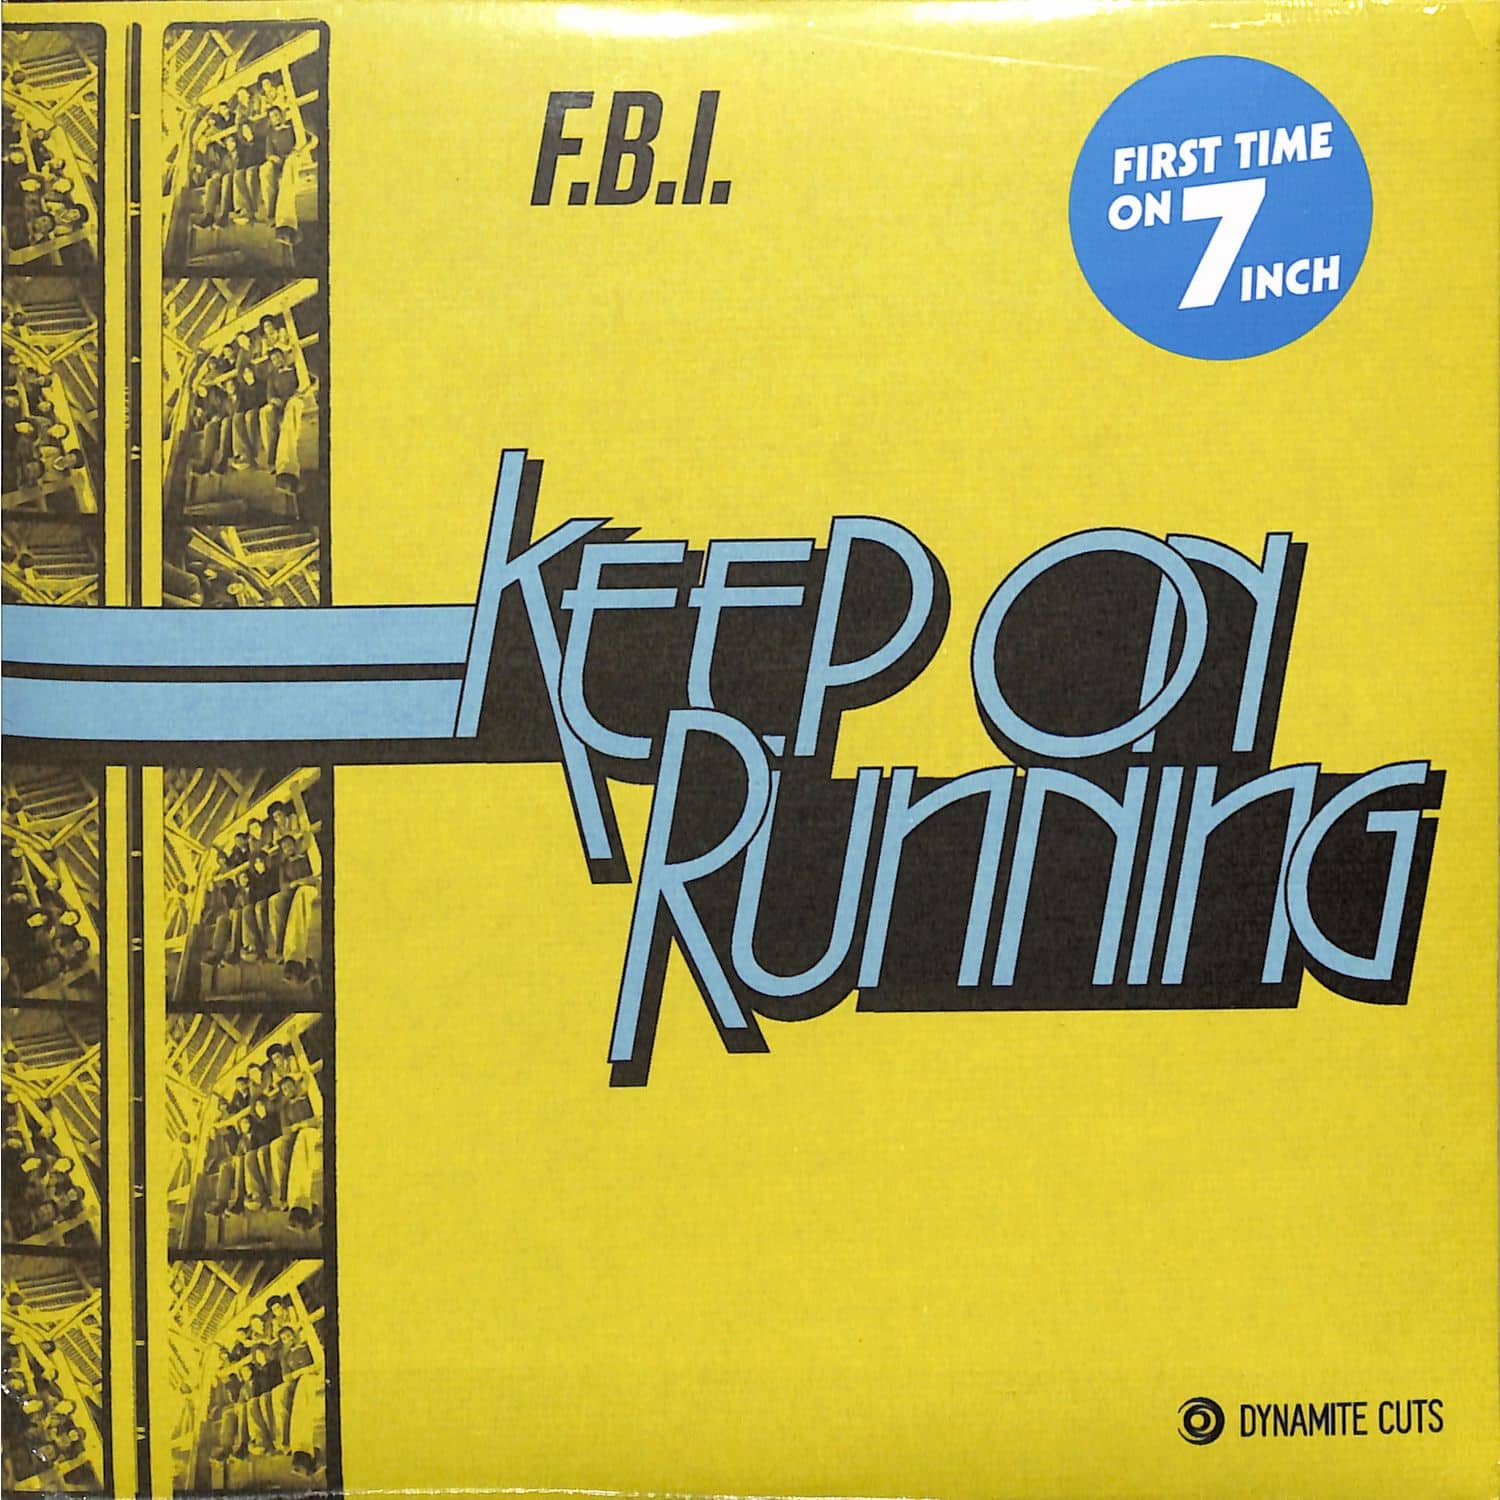 F.B.I. - KEEP ON RUNNING 